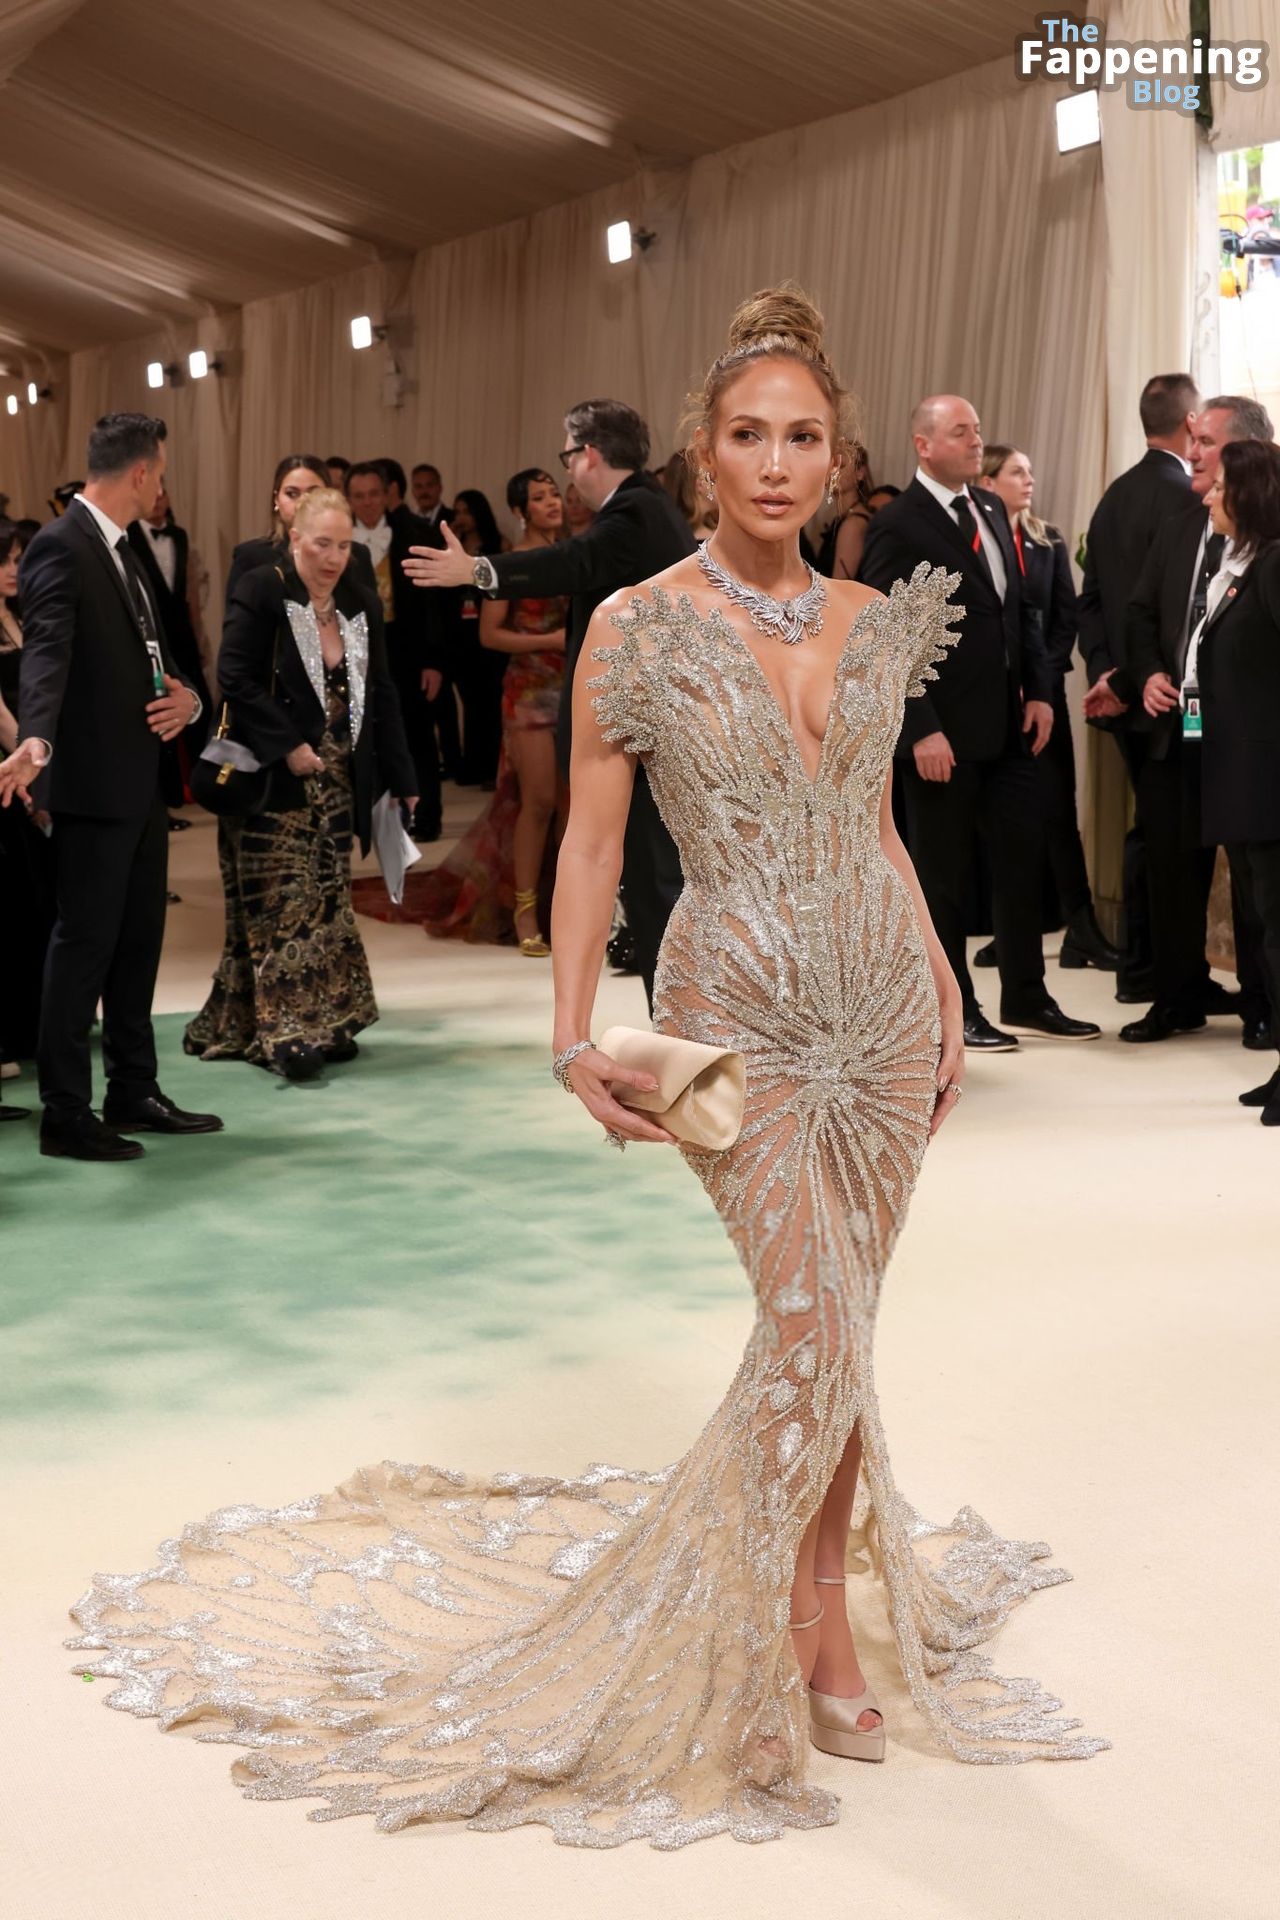 Jennifer-Lopez-Hot-28-The-Fappening-Blog.jpg